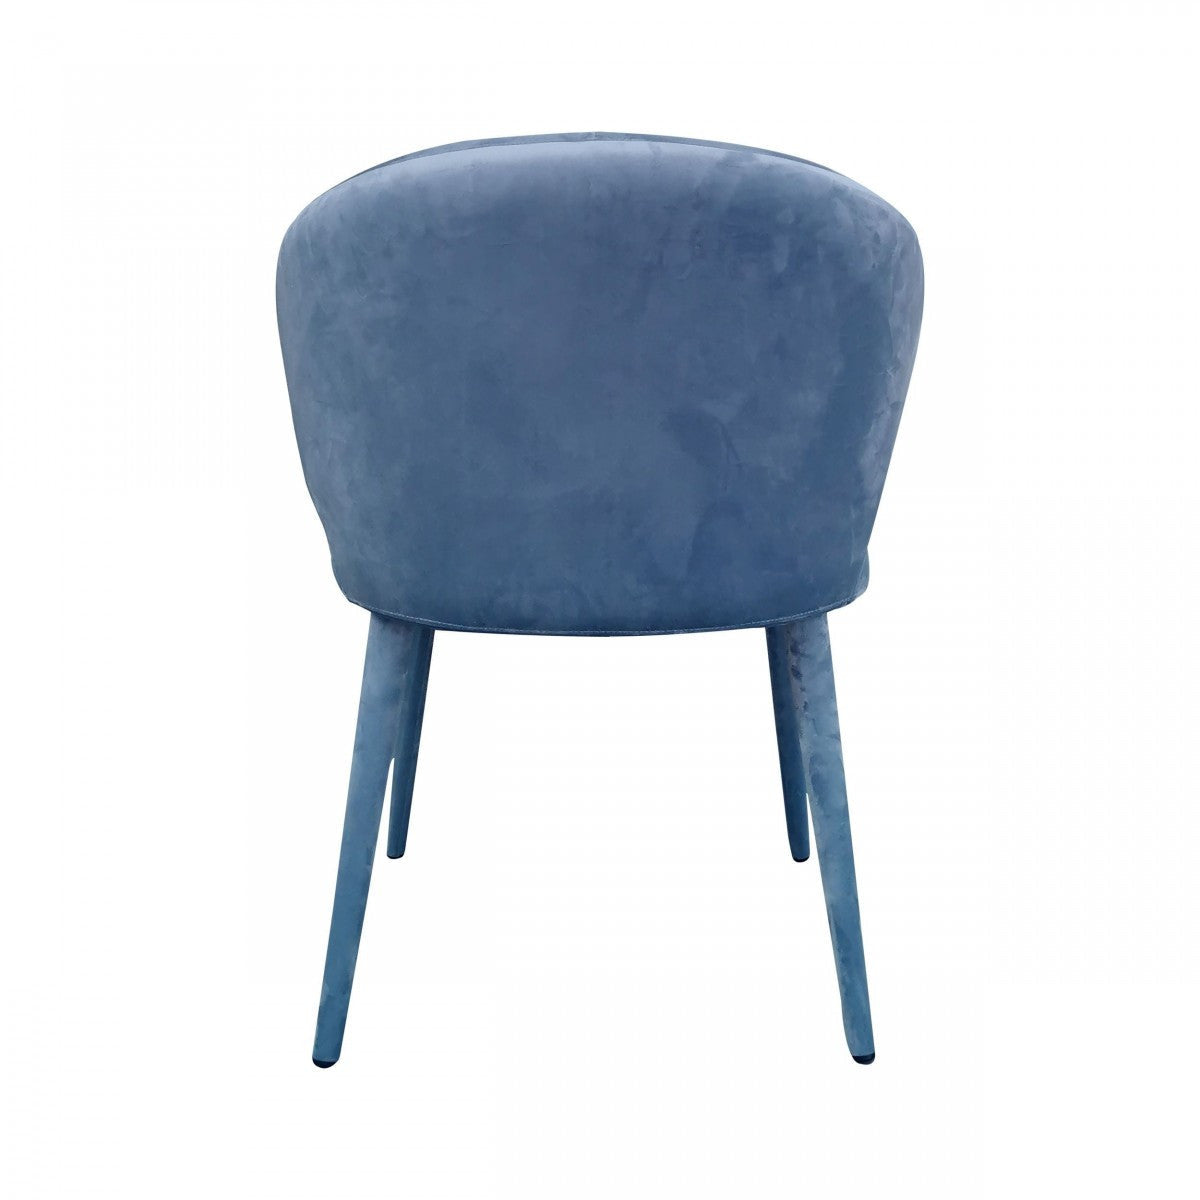 Modrest Salem Modern Blue Grey Fabric Dining Chair